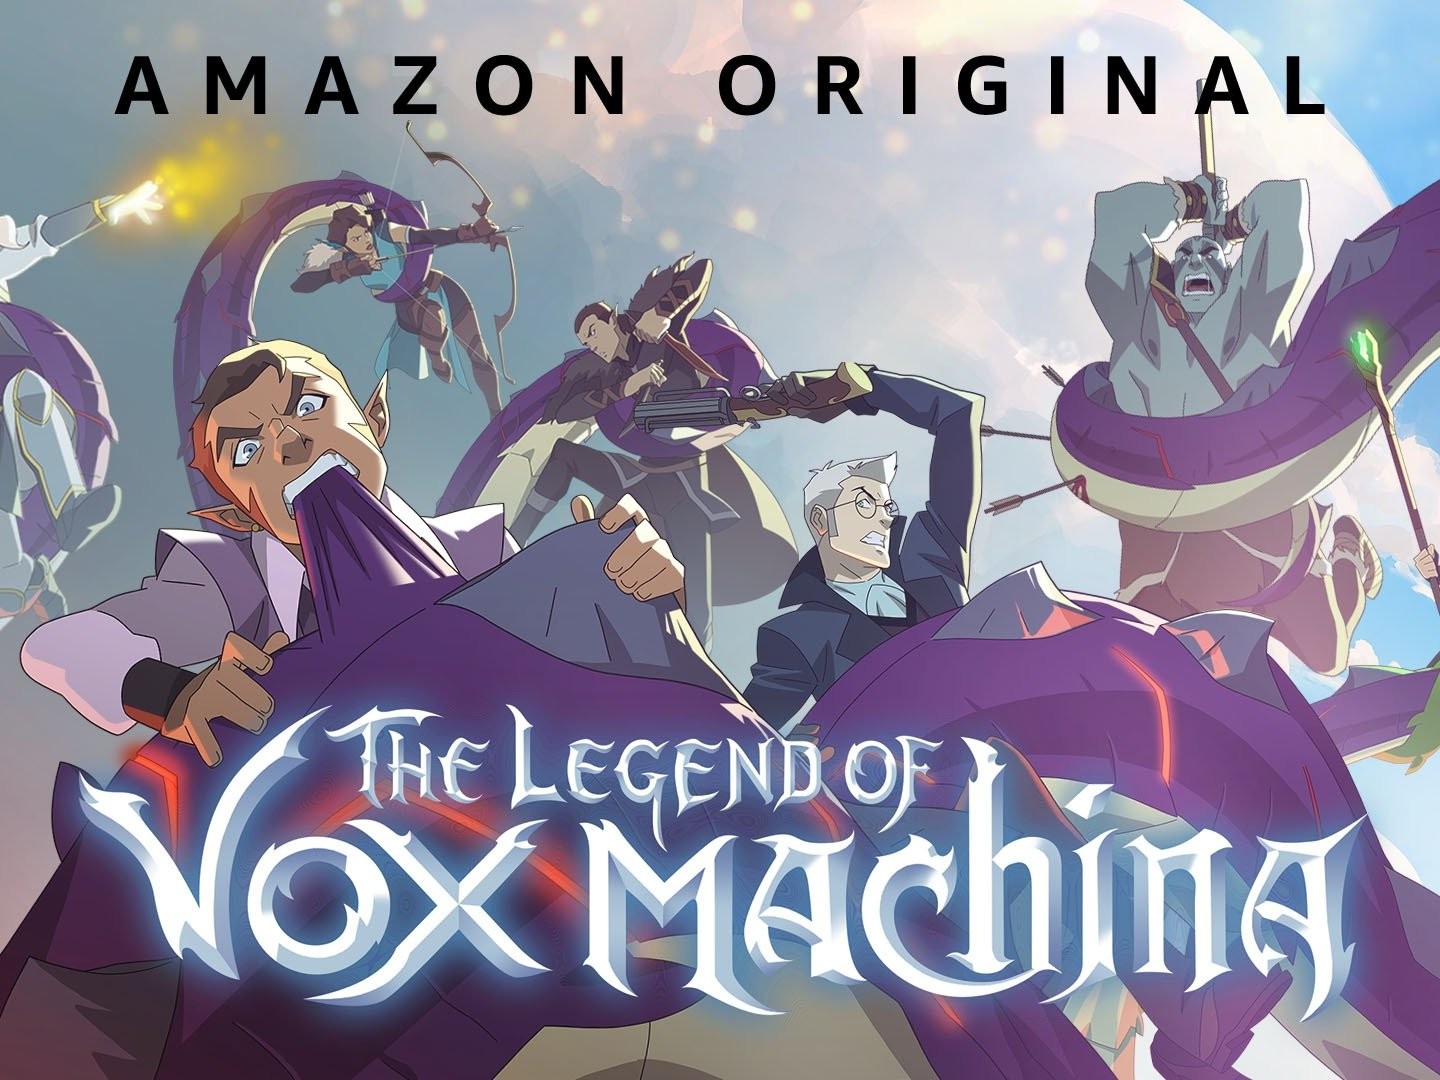 Where To Watch The Legend Of Vox Machina - IMDb